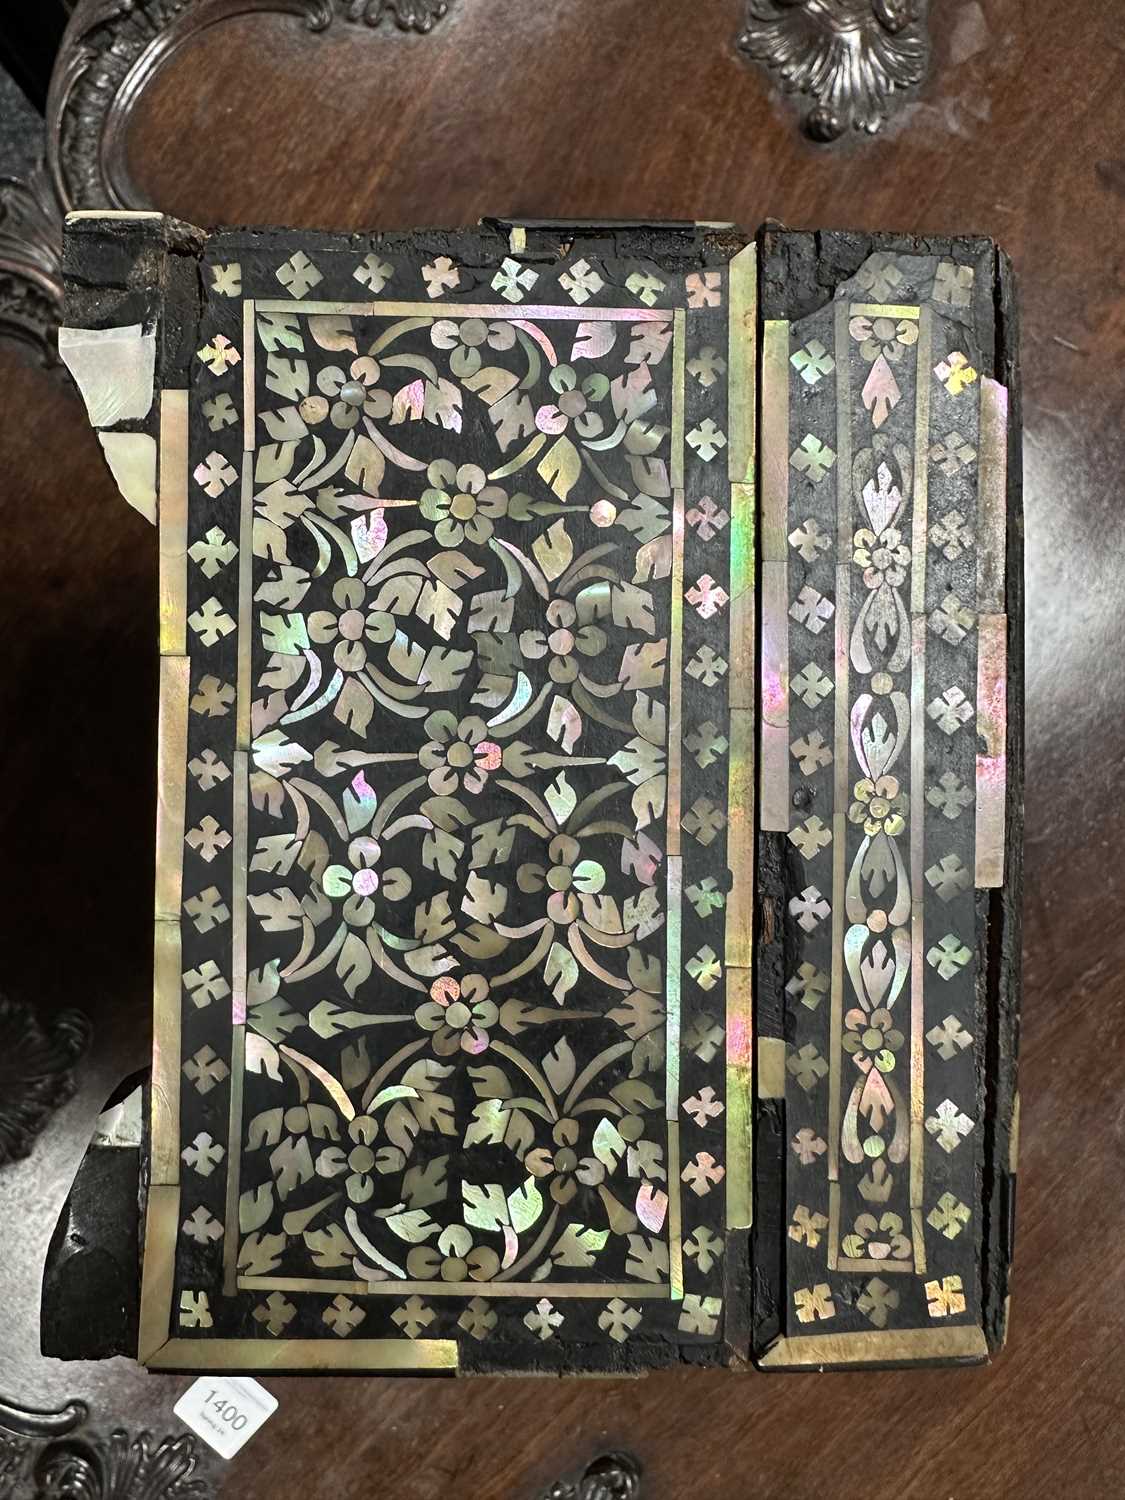 A RARE 17TH/18TH CENTURY INDO PORTUGUESE INLAID CASKET - Image 11 of 13